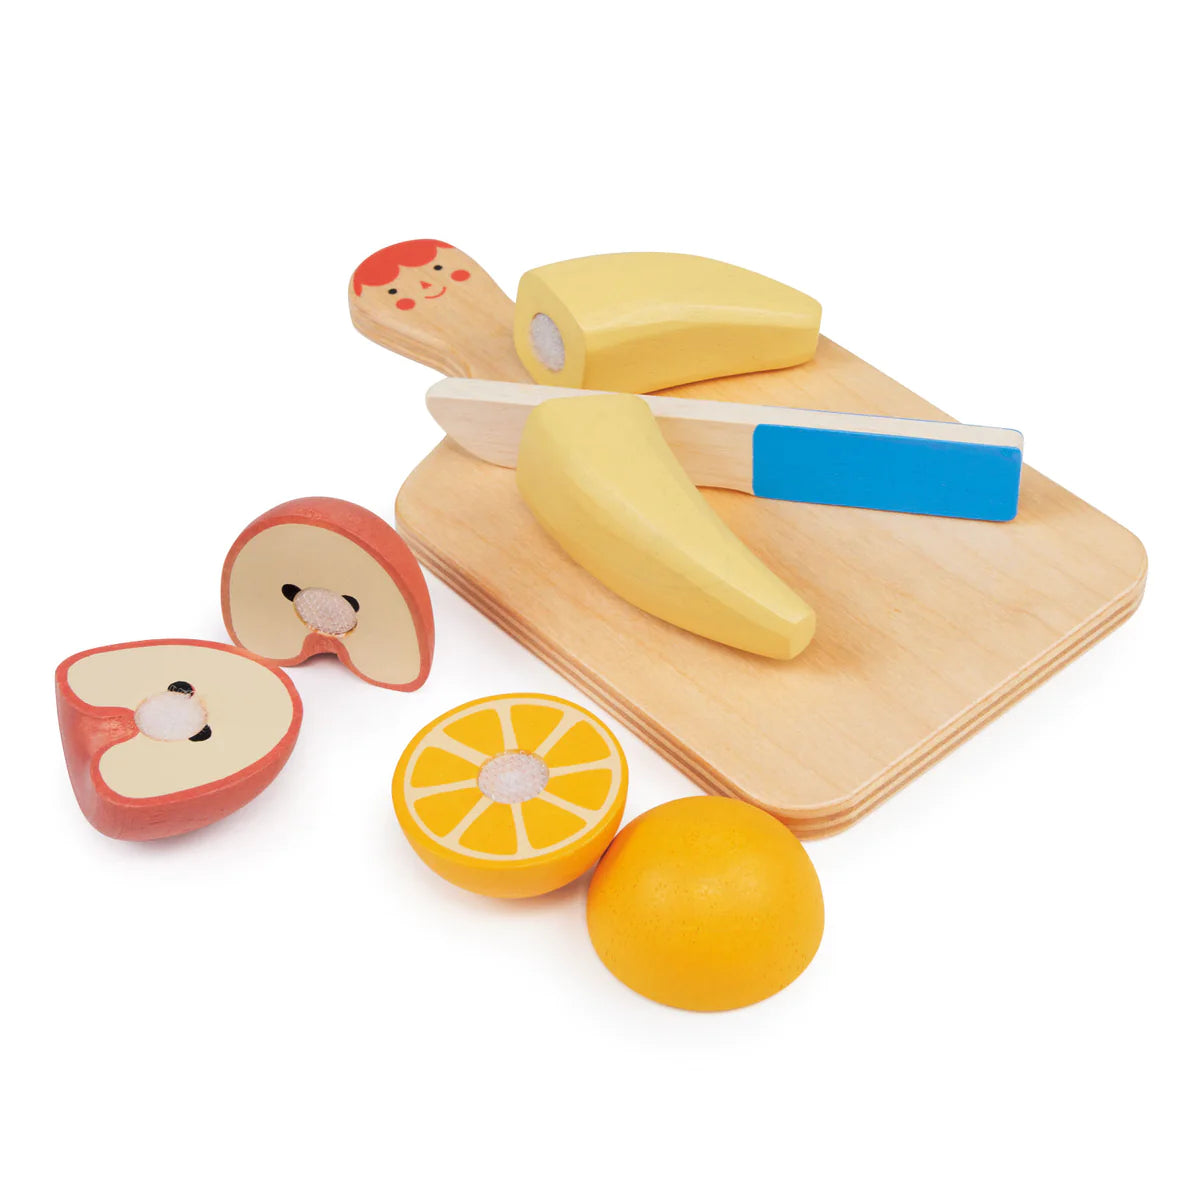 Wooden Fruit Chopping Board